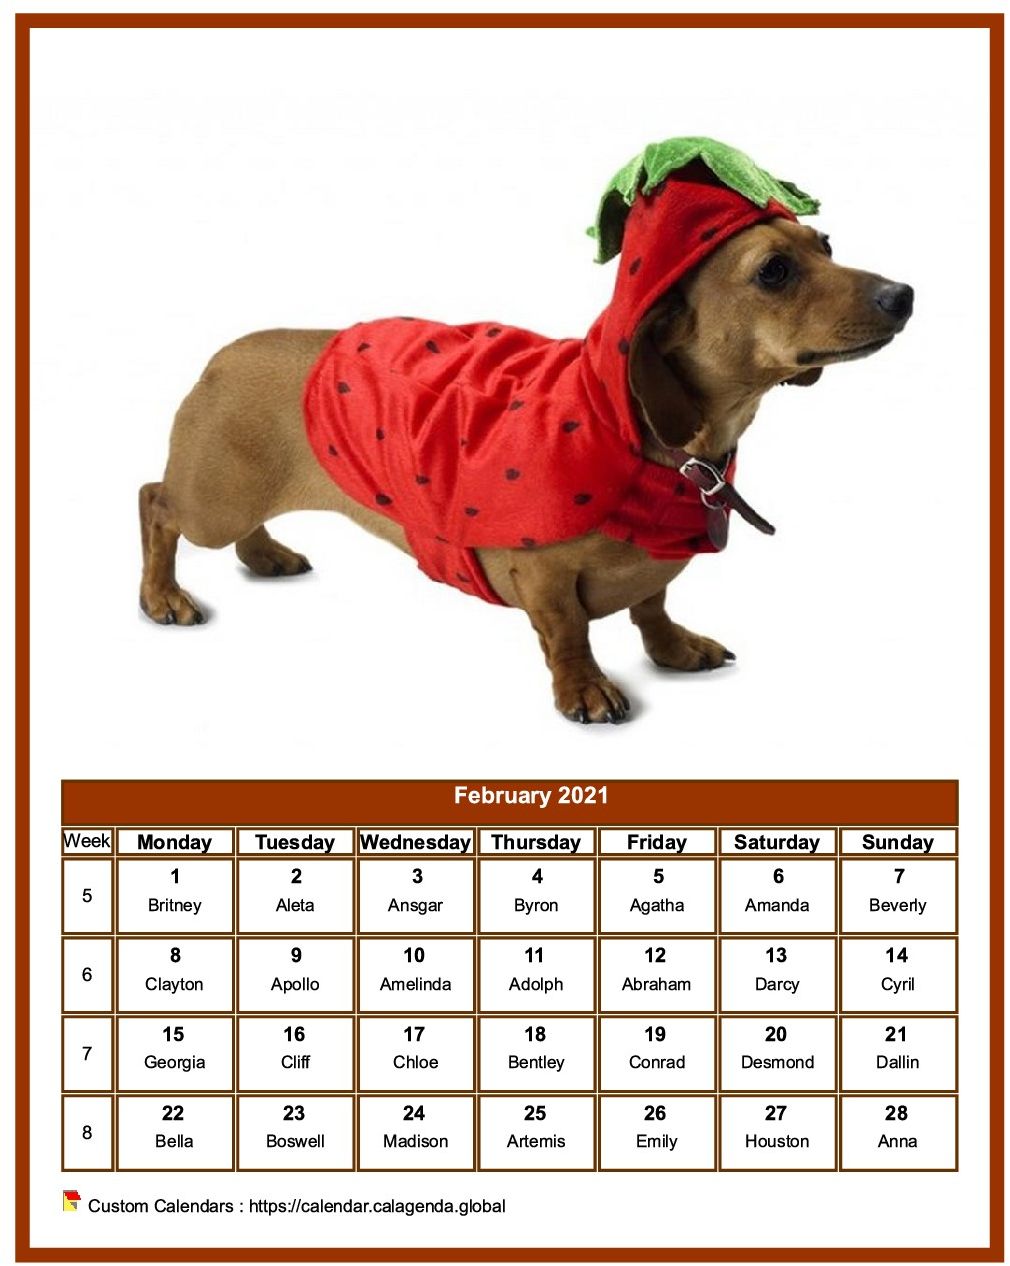 Calendar February 2021 dogs